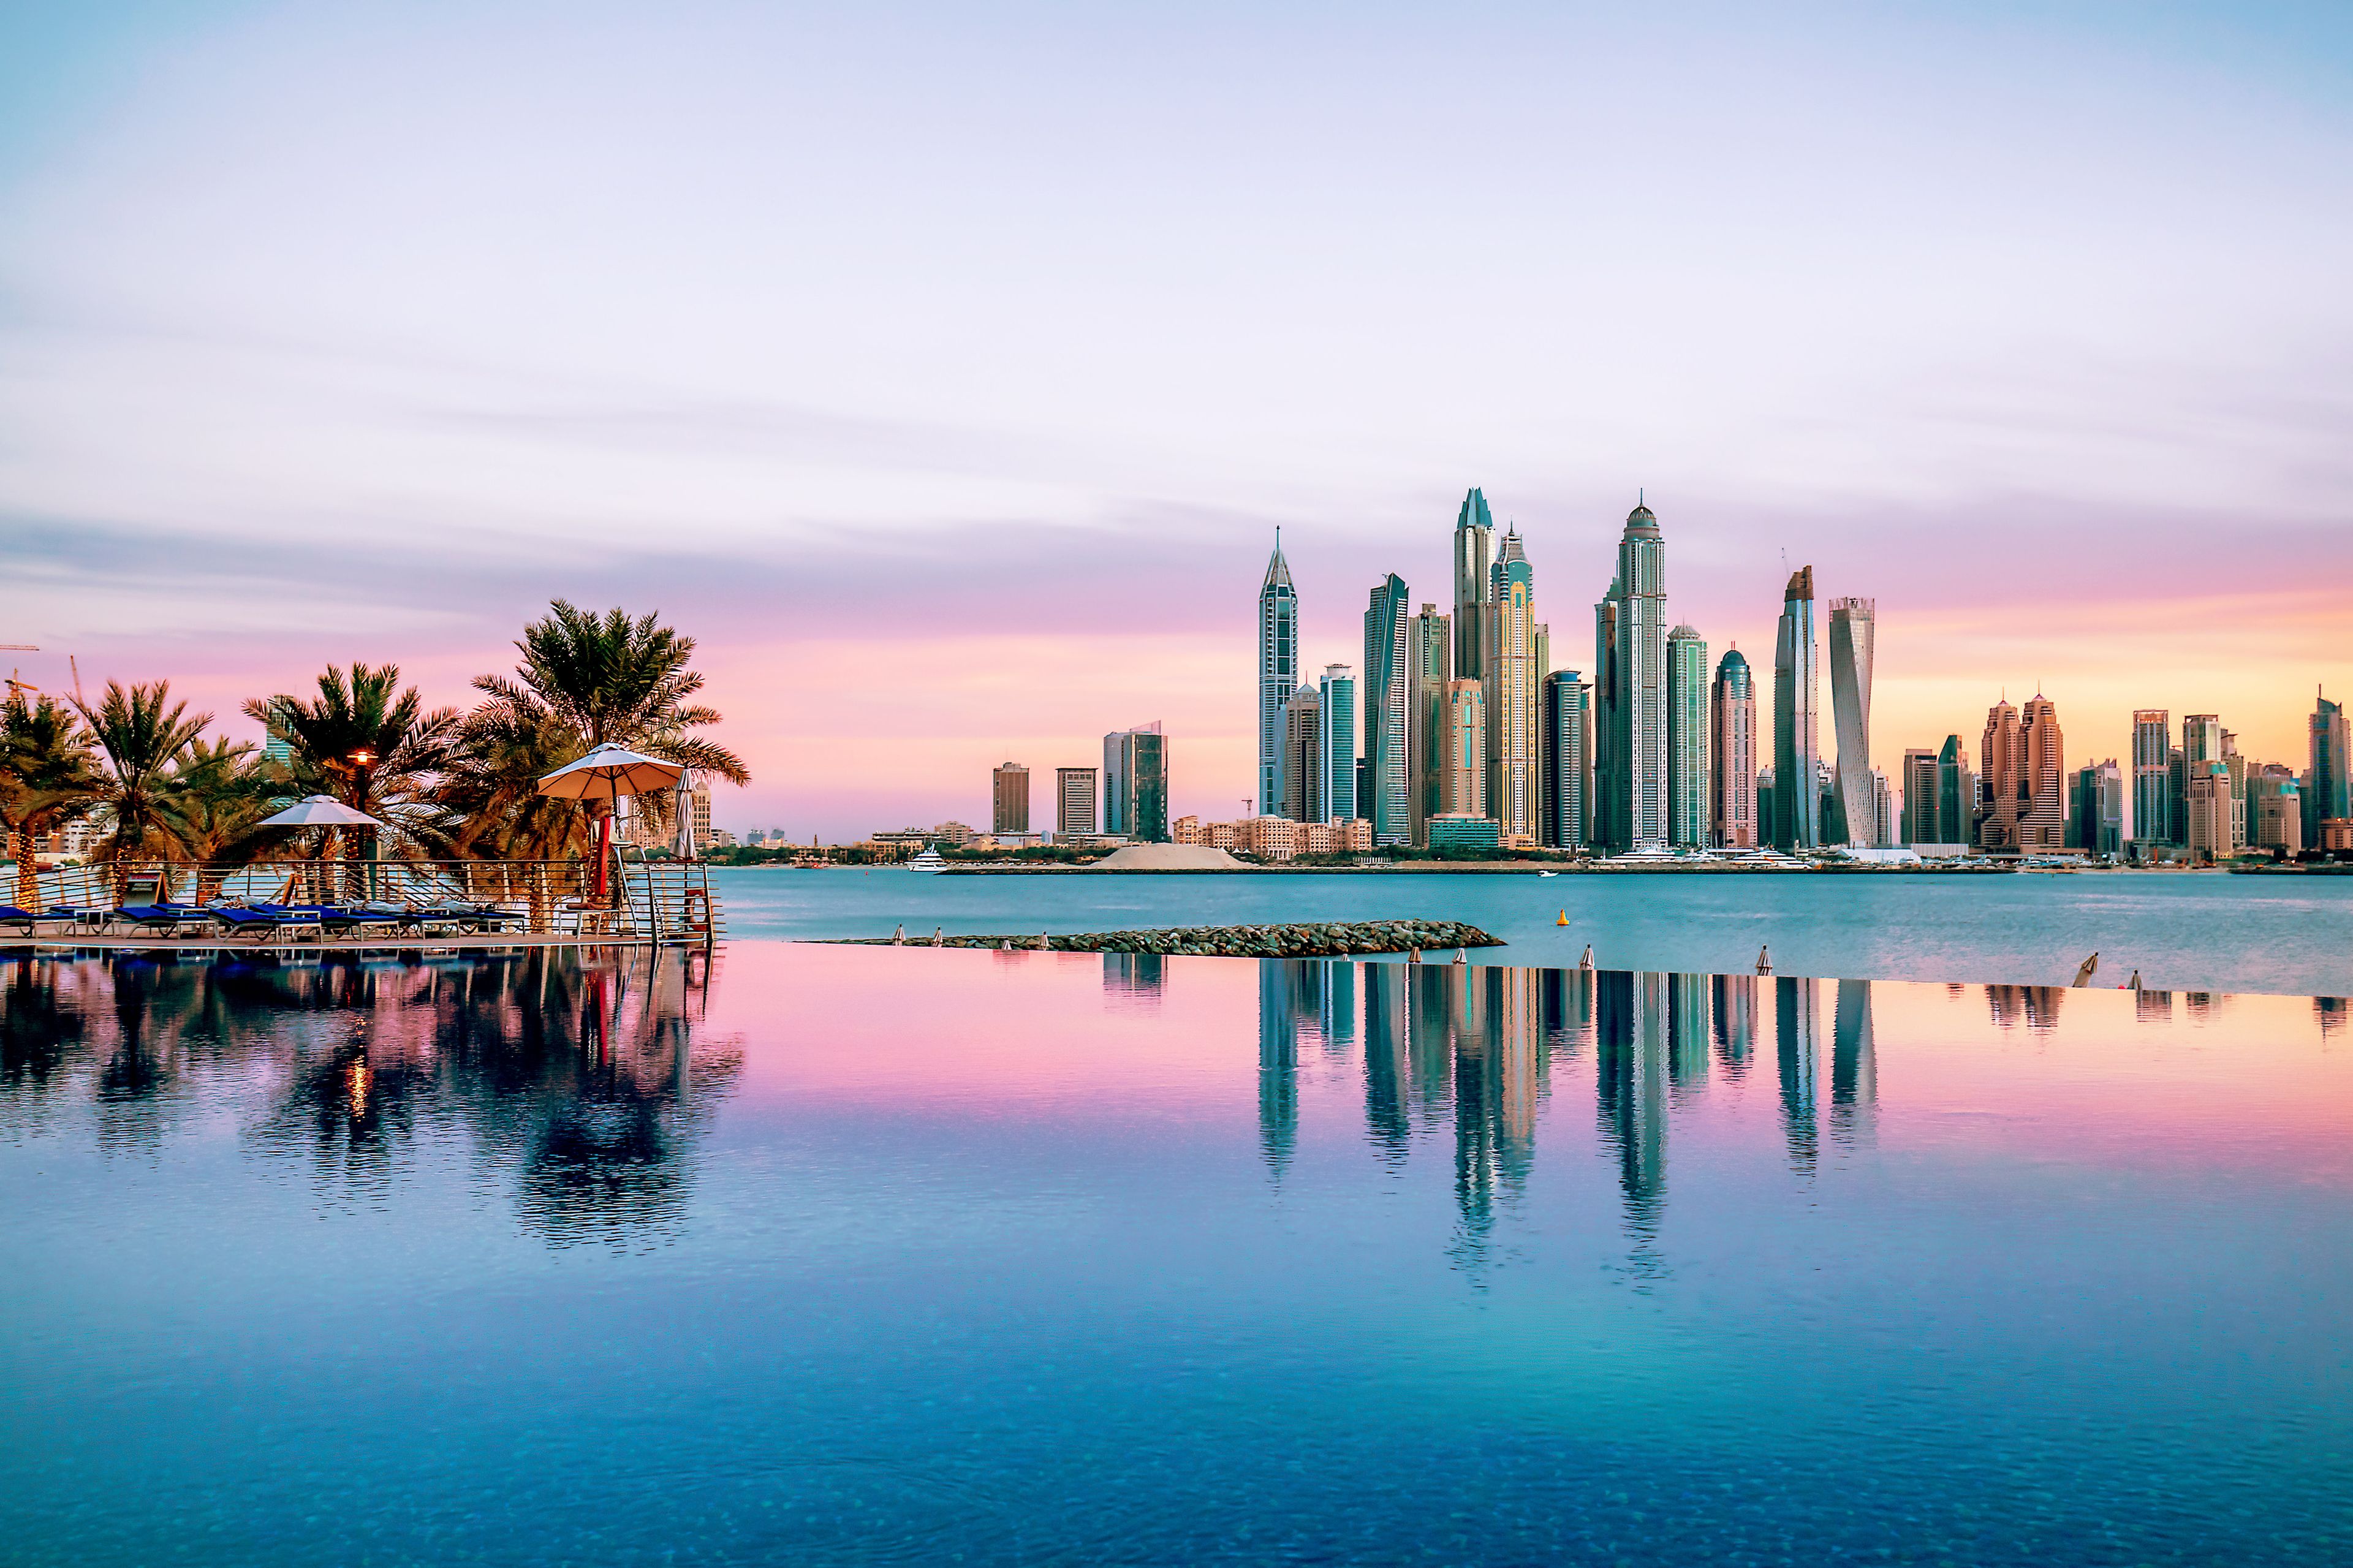 El hotel Dukes The Palm, a Royal Hideaway Hotel en Dubái abrió sus puertas en 2019.